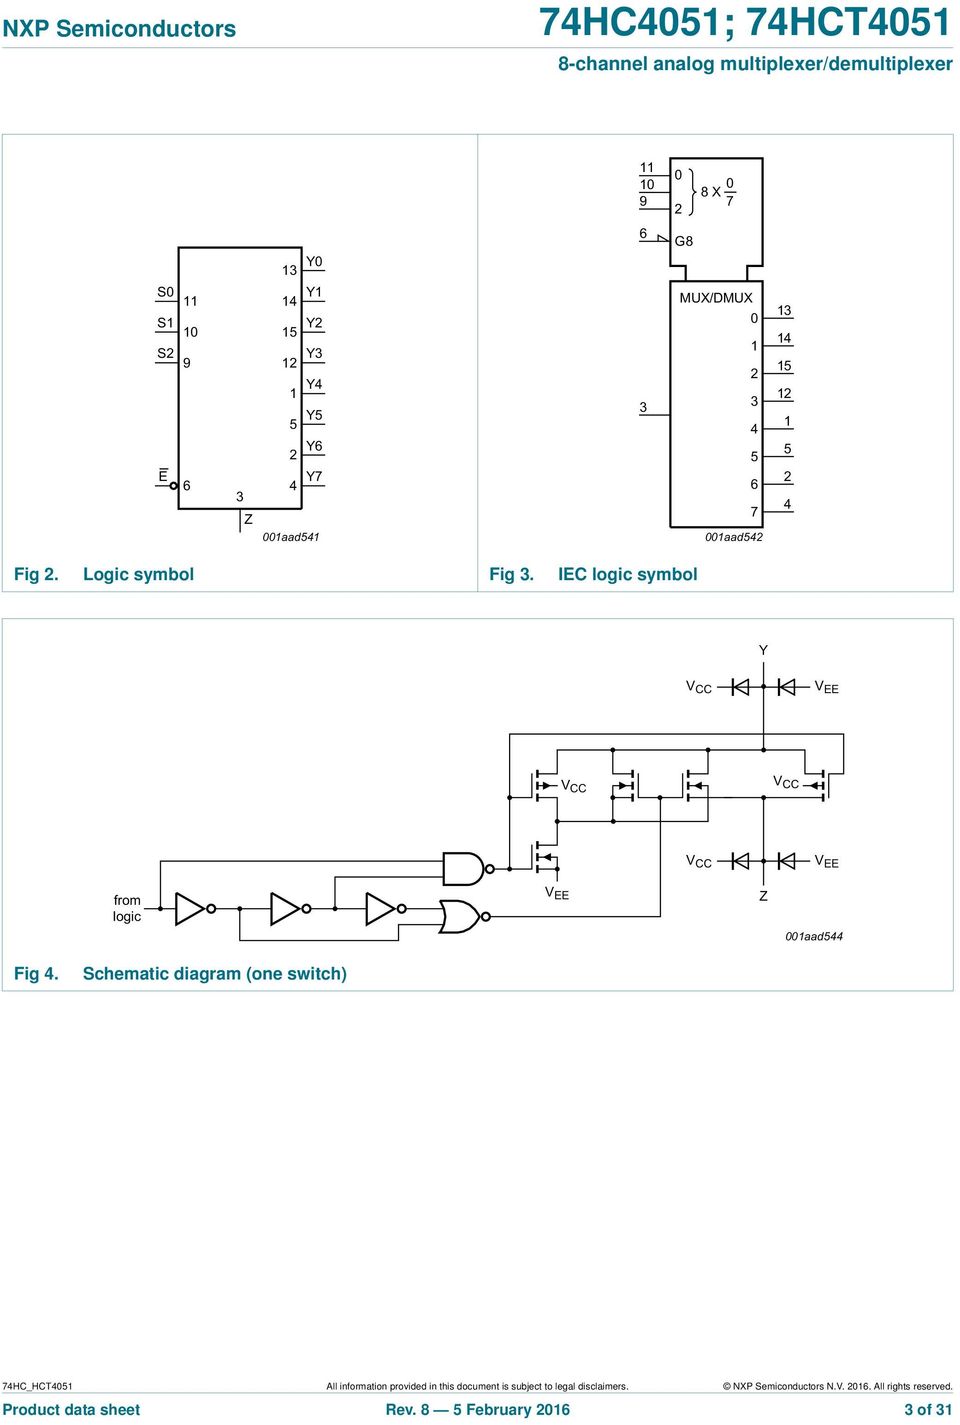 Schematic diagram (one switch)